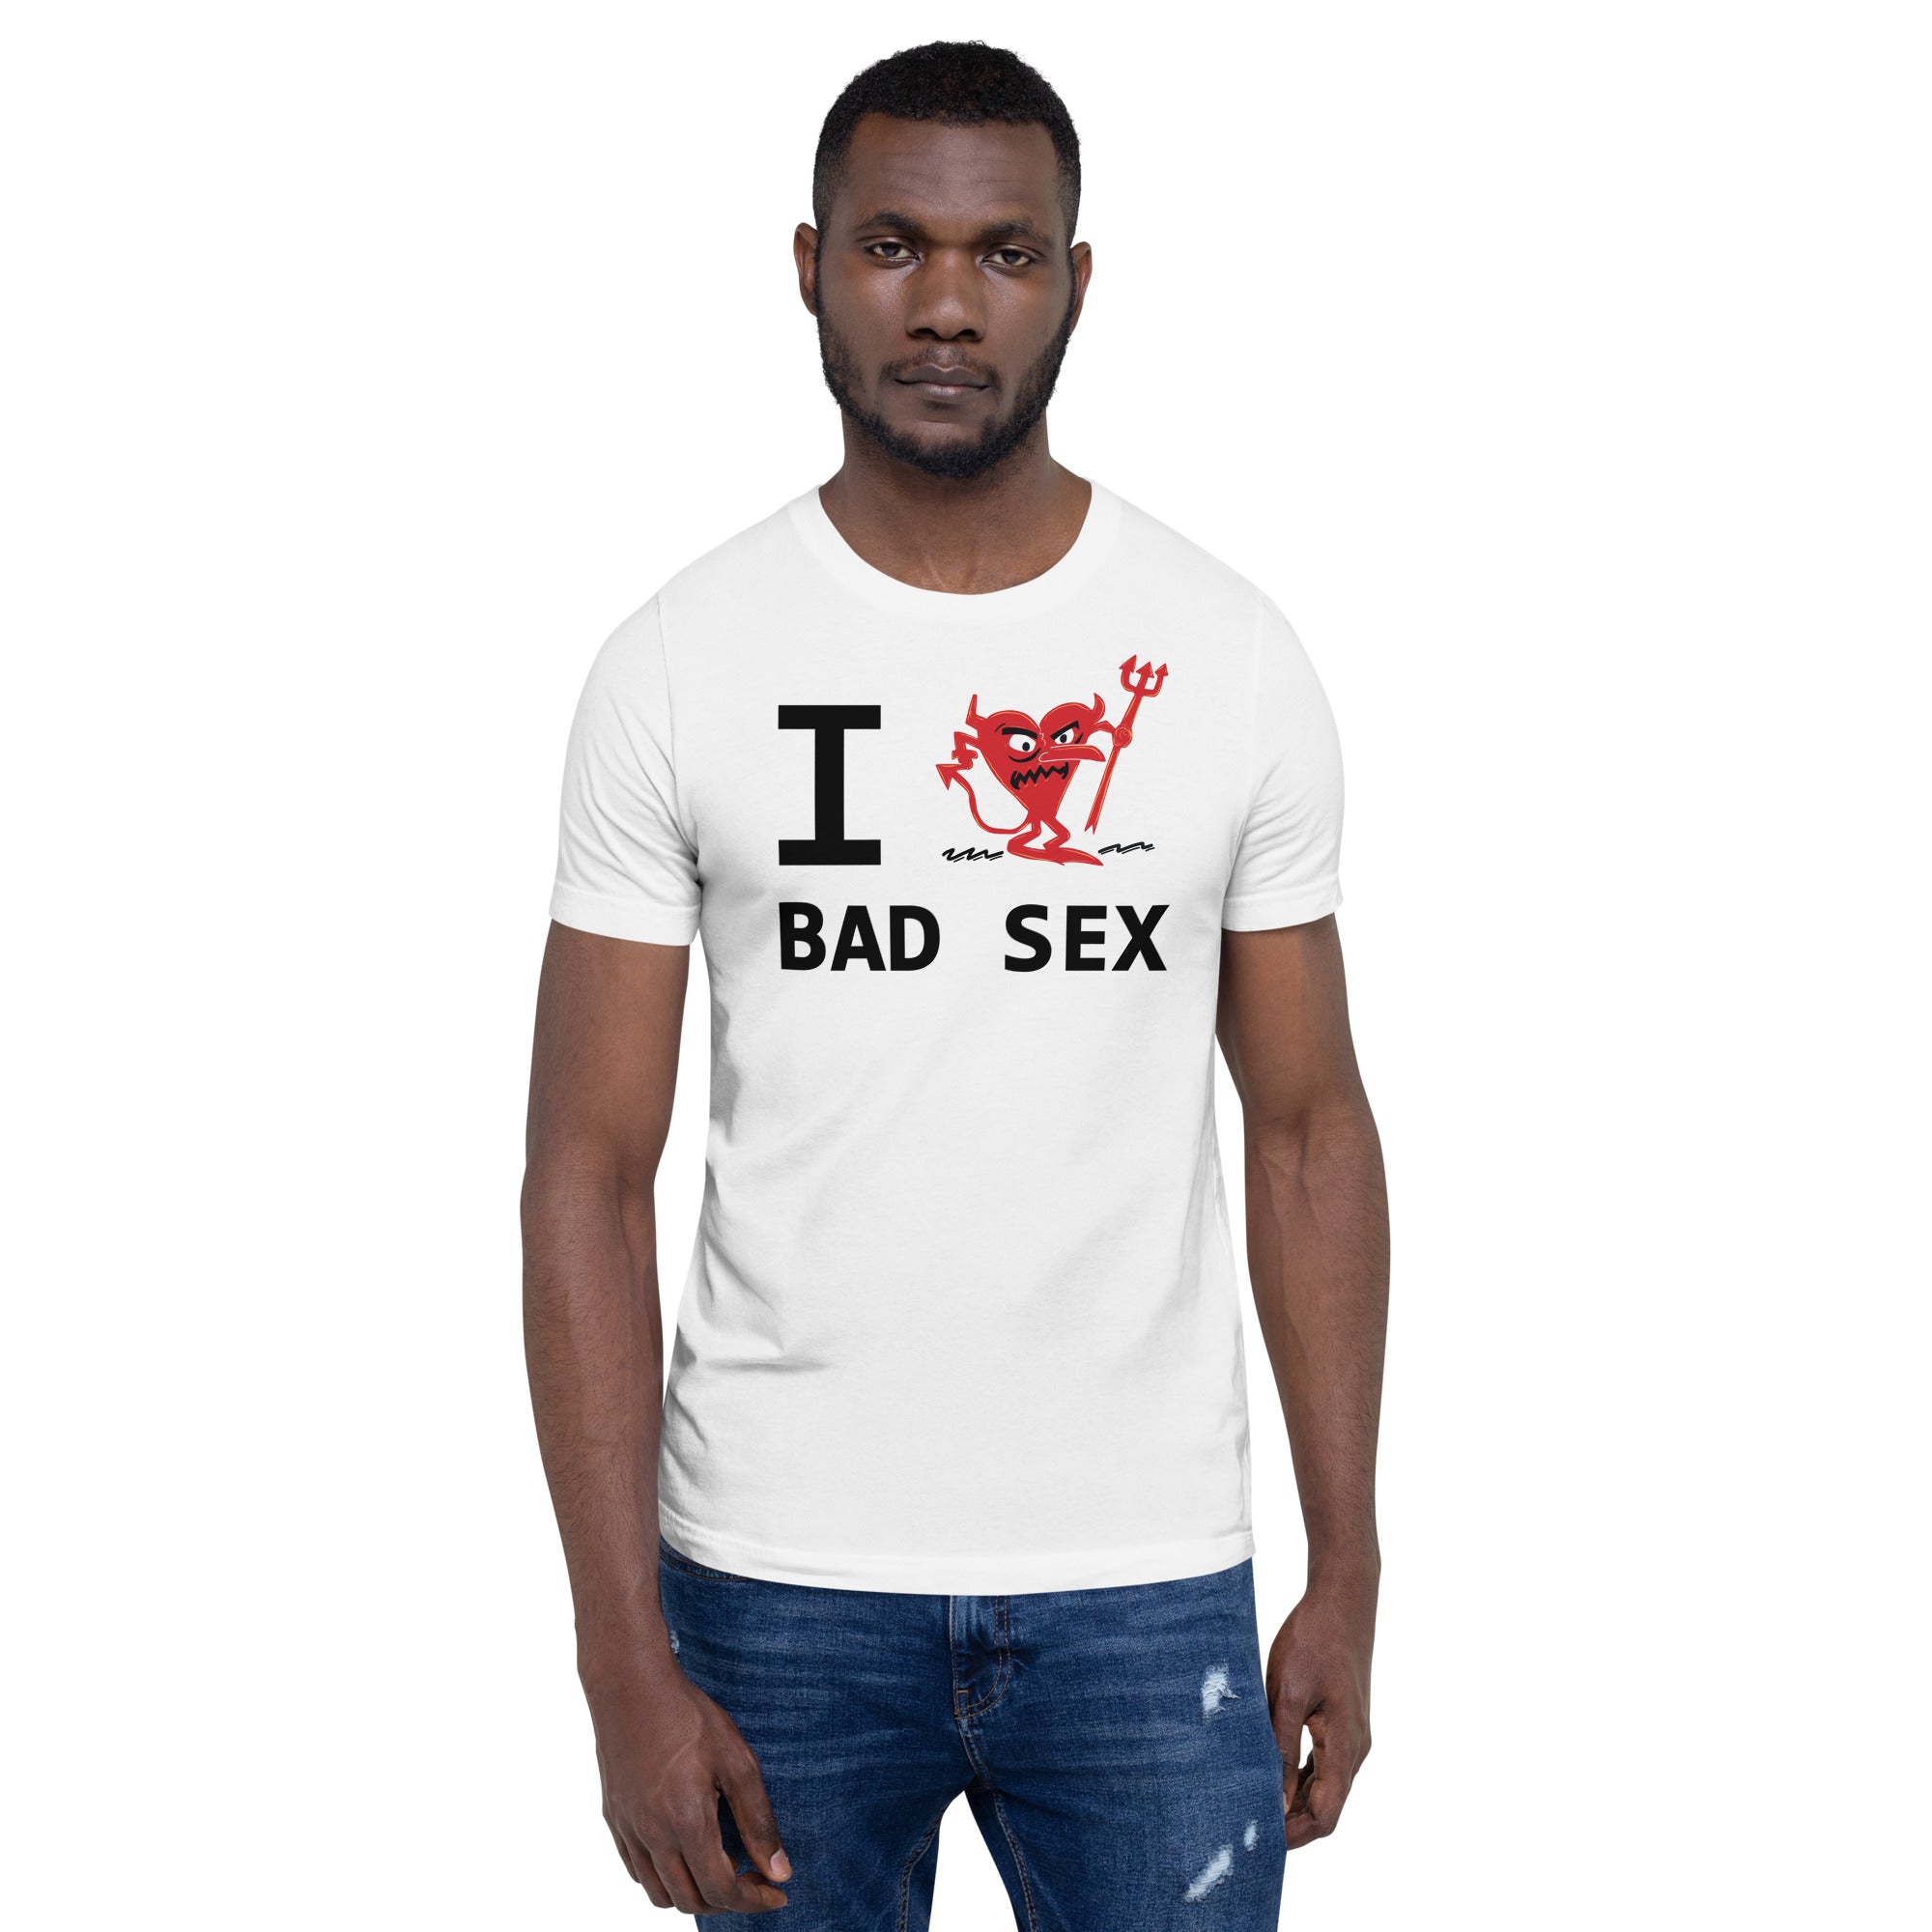 BAD SEX Unisex t-shirt